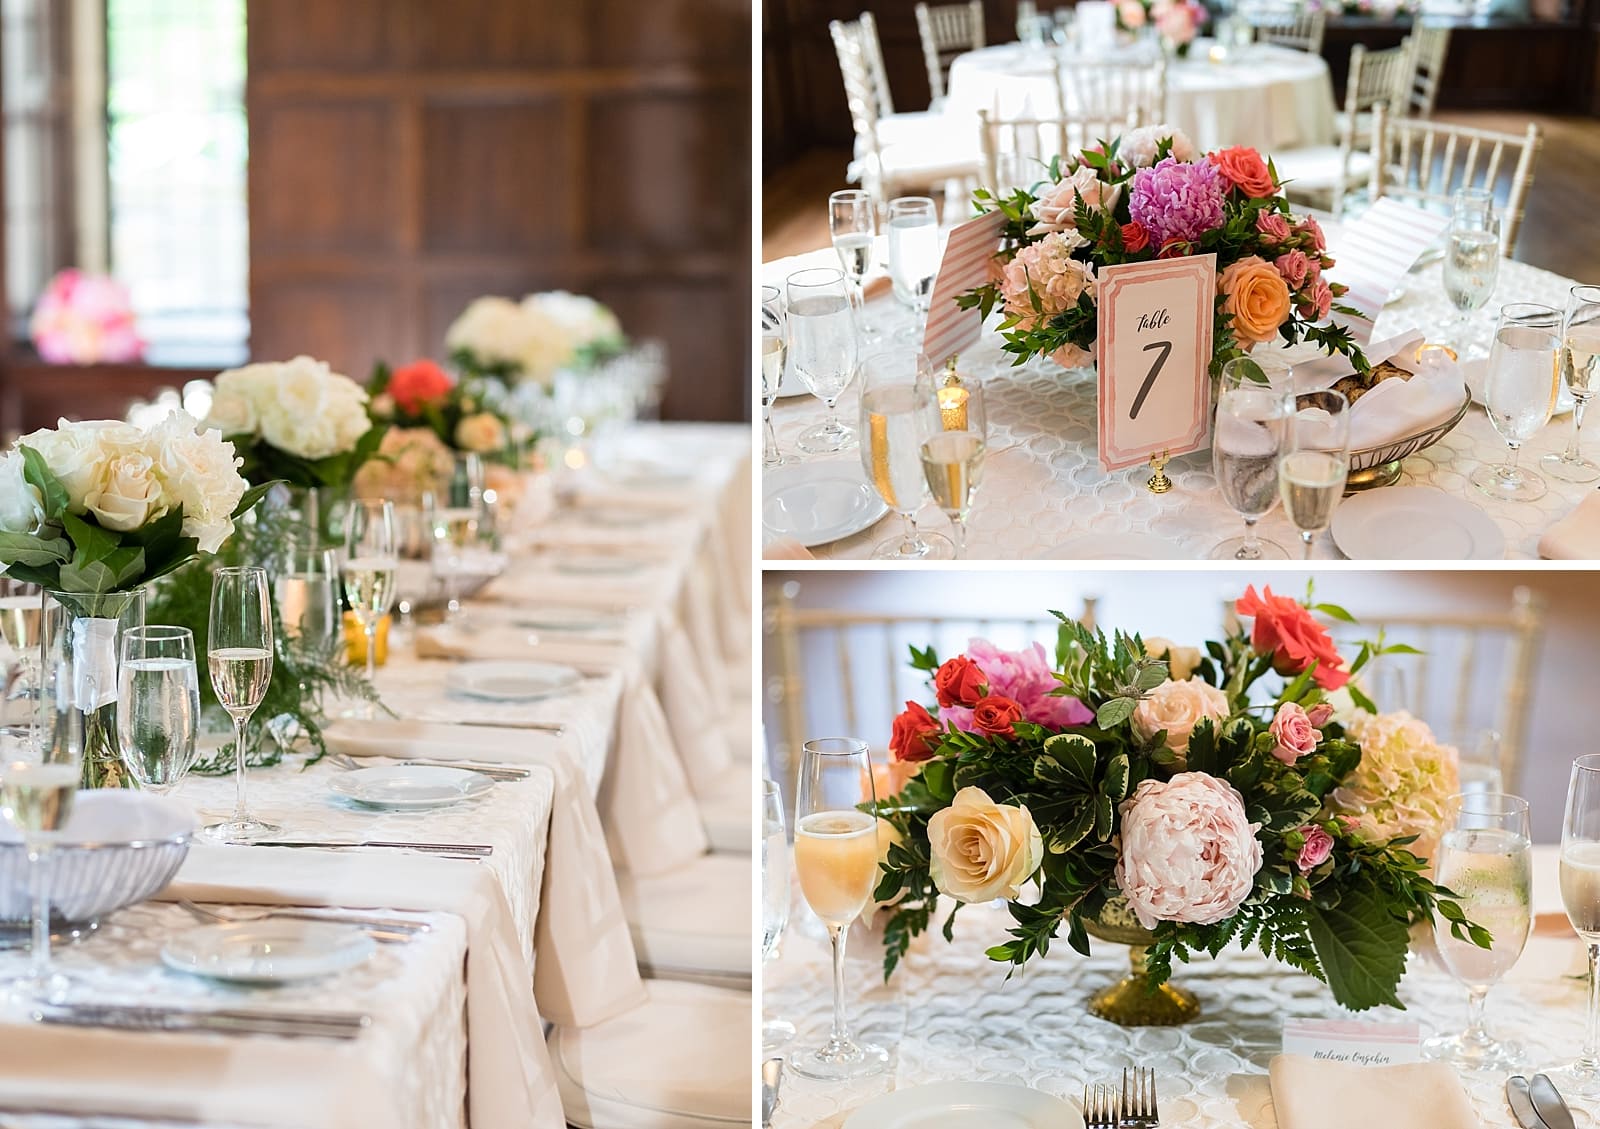 Wedding venue, Wedding reception, wedding details, wedding florals, table settings